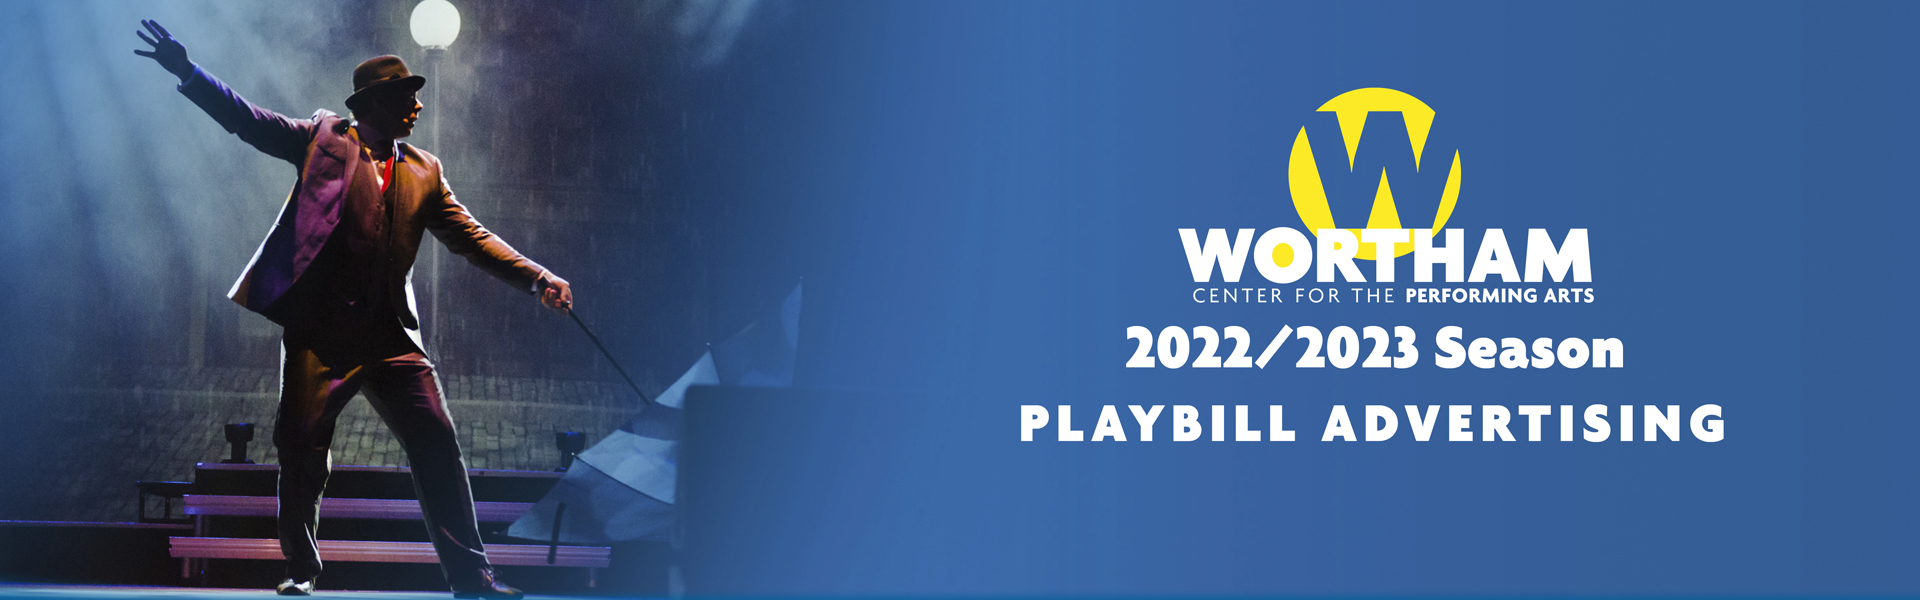 2022/2023 Wortham Center Playbill Advertising